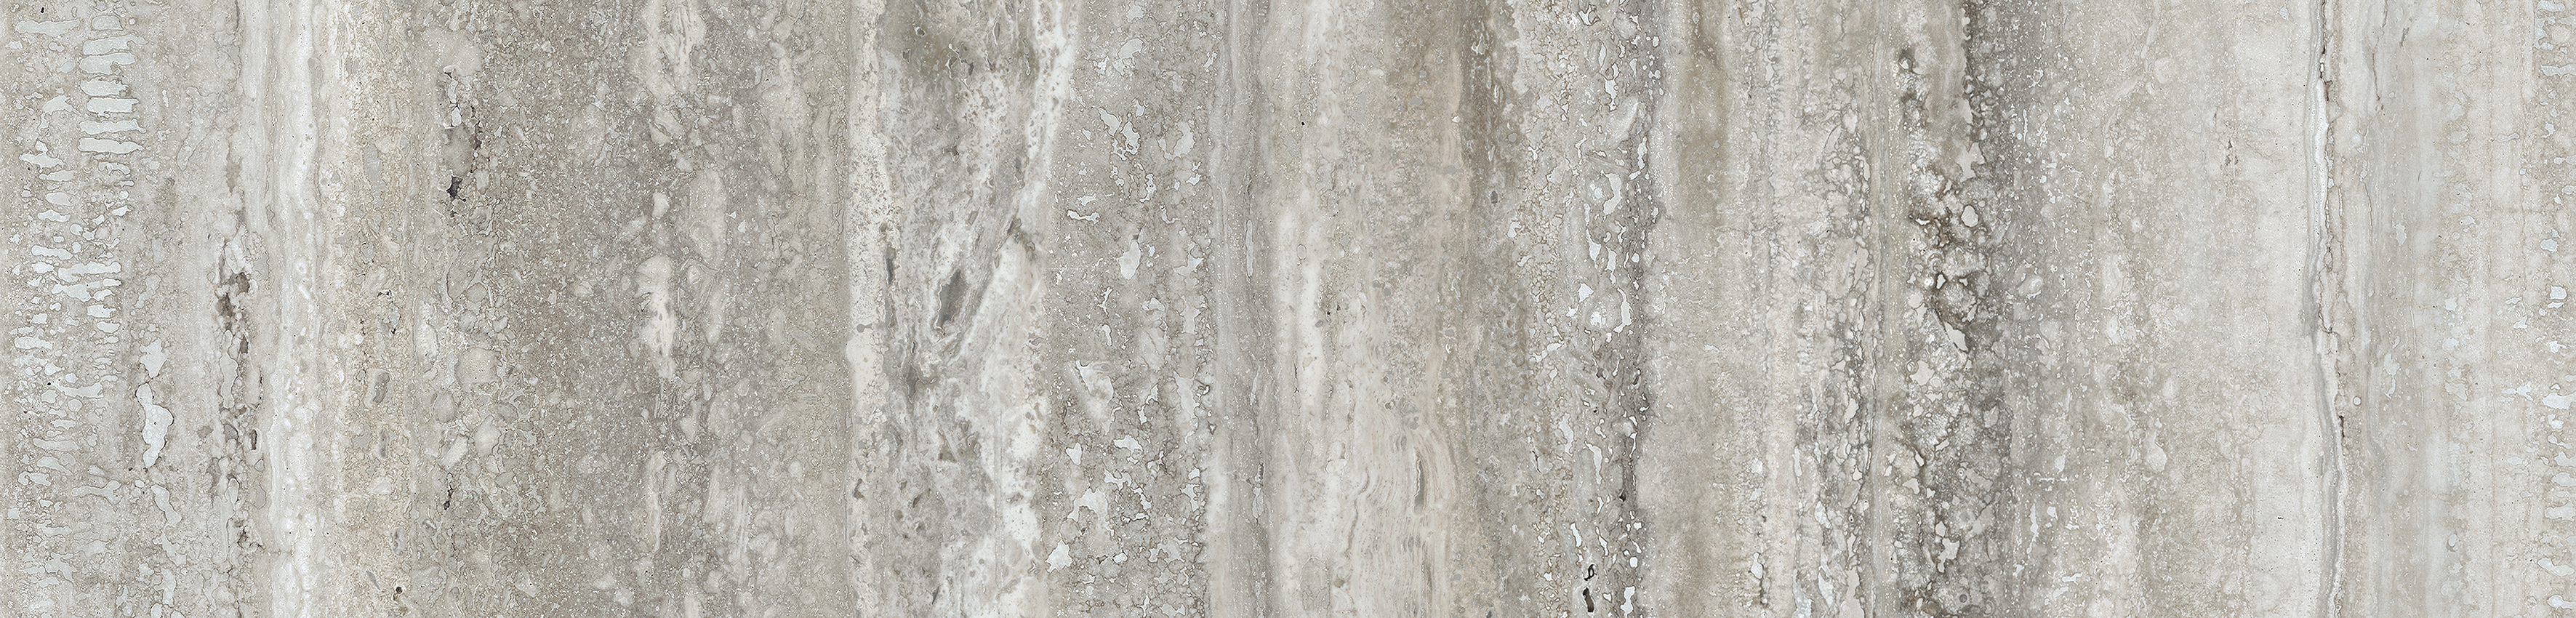 travertino instrata pattern glazed porcelain bullnose molding from la marca anatolia collection distributed by surface group international polished finish straight edge edge 3x12 bar shape